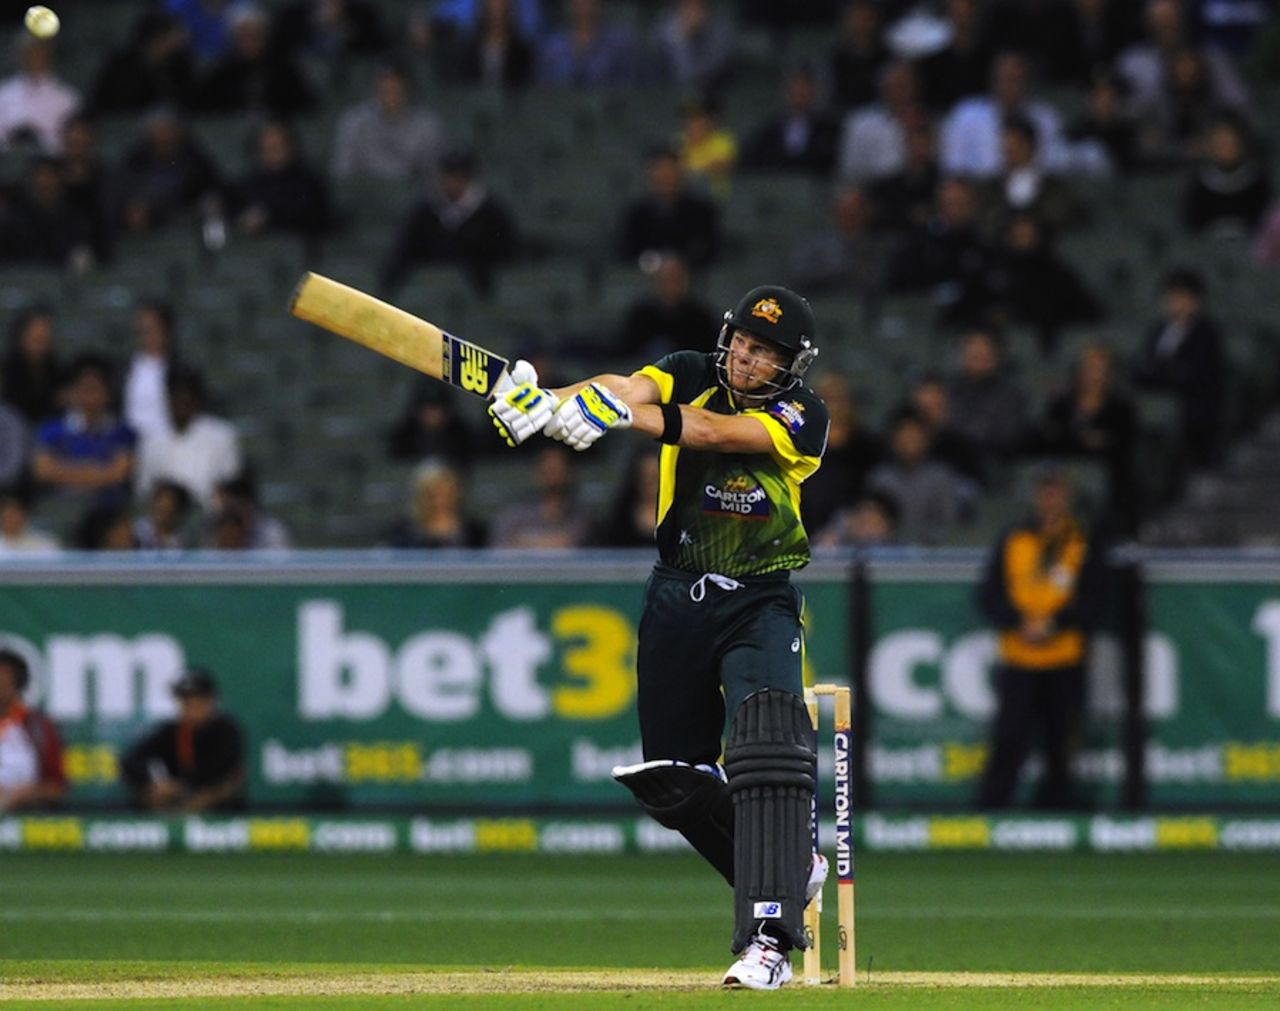 Steven Smith clubs the ball over mid-off, Australia v South Africa, 4th ODI, Melbourne, November 21, 2014